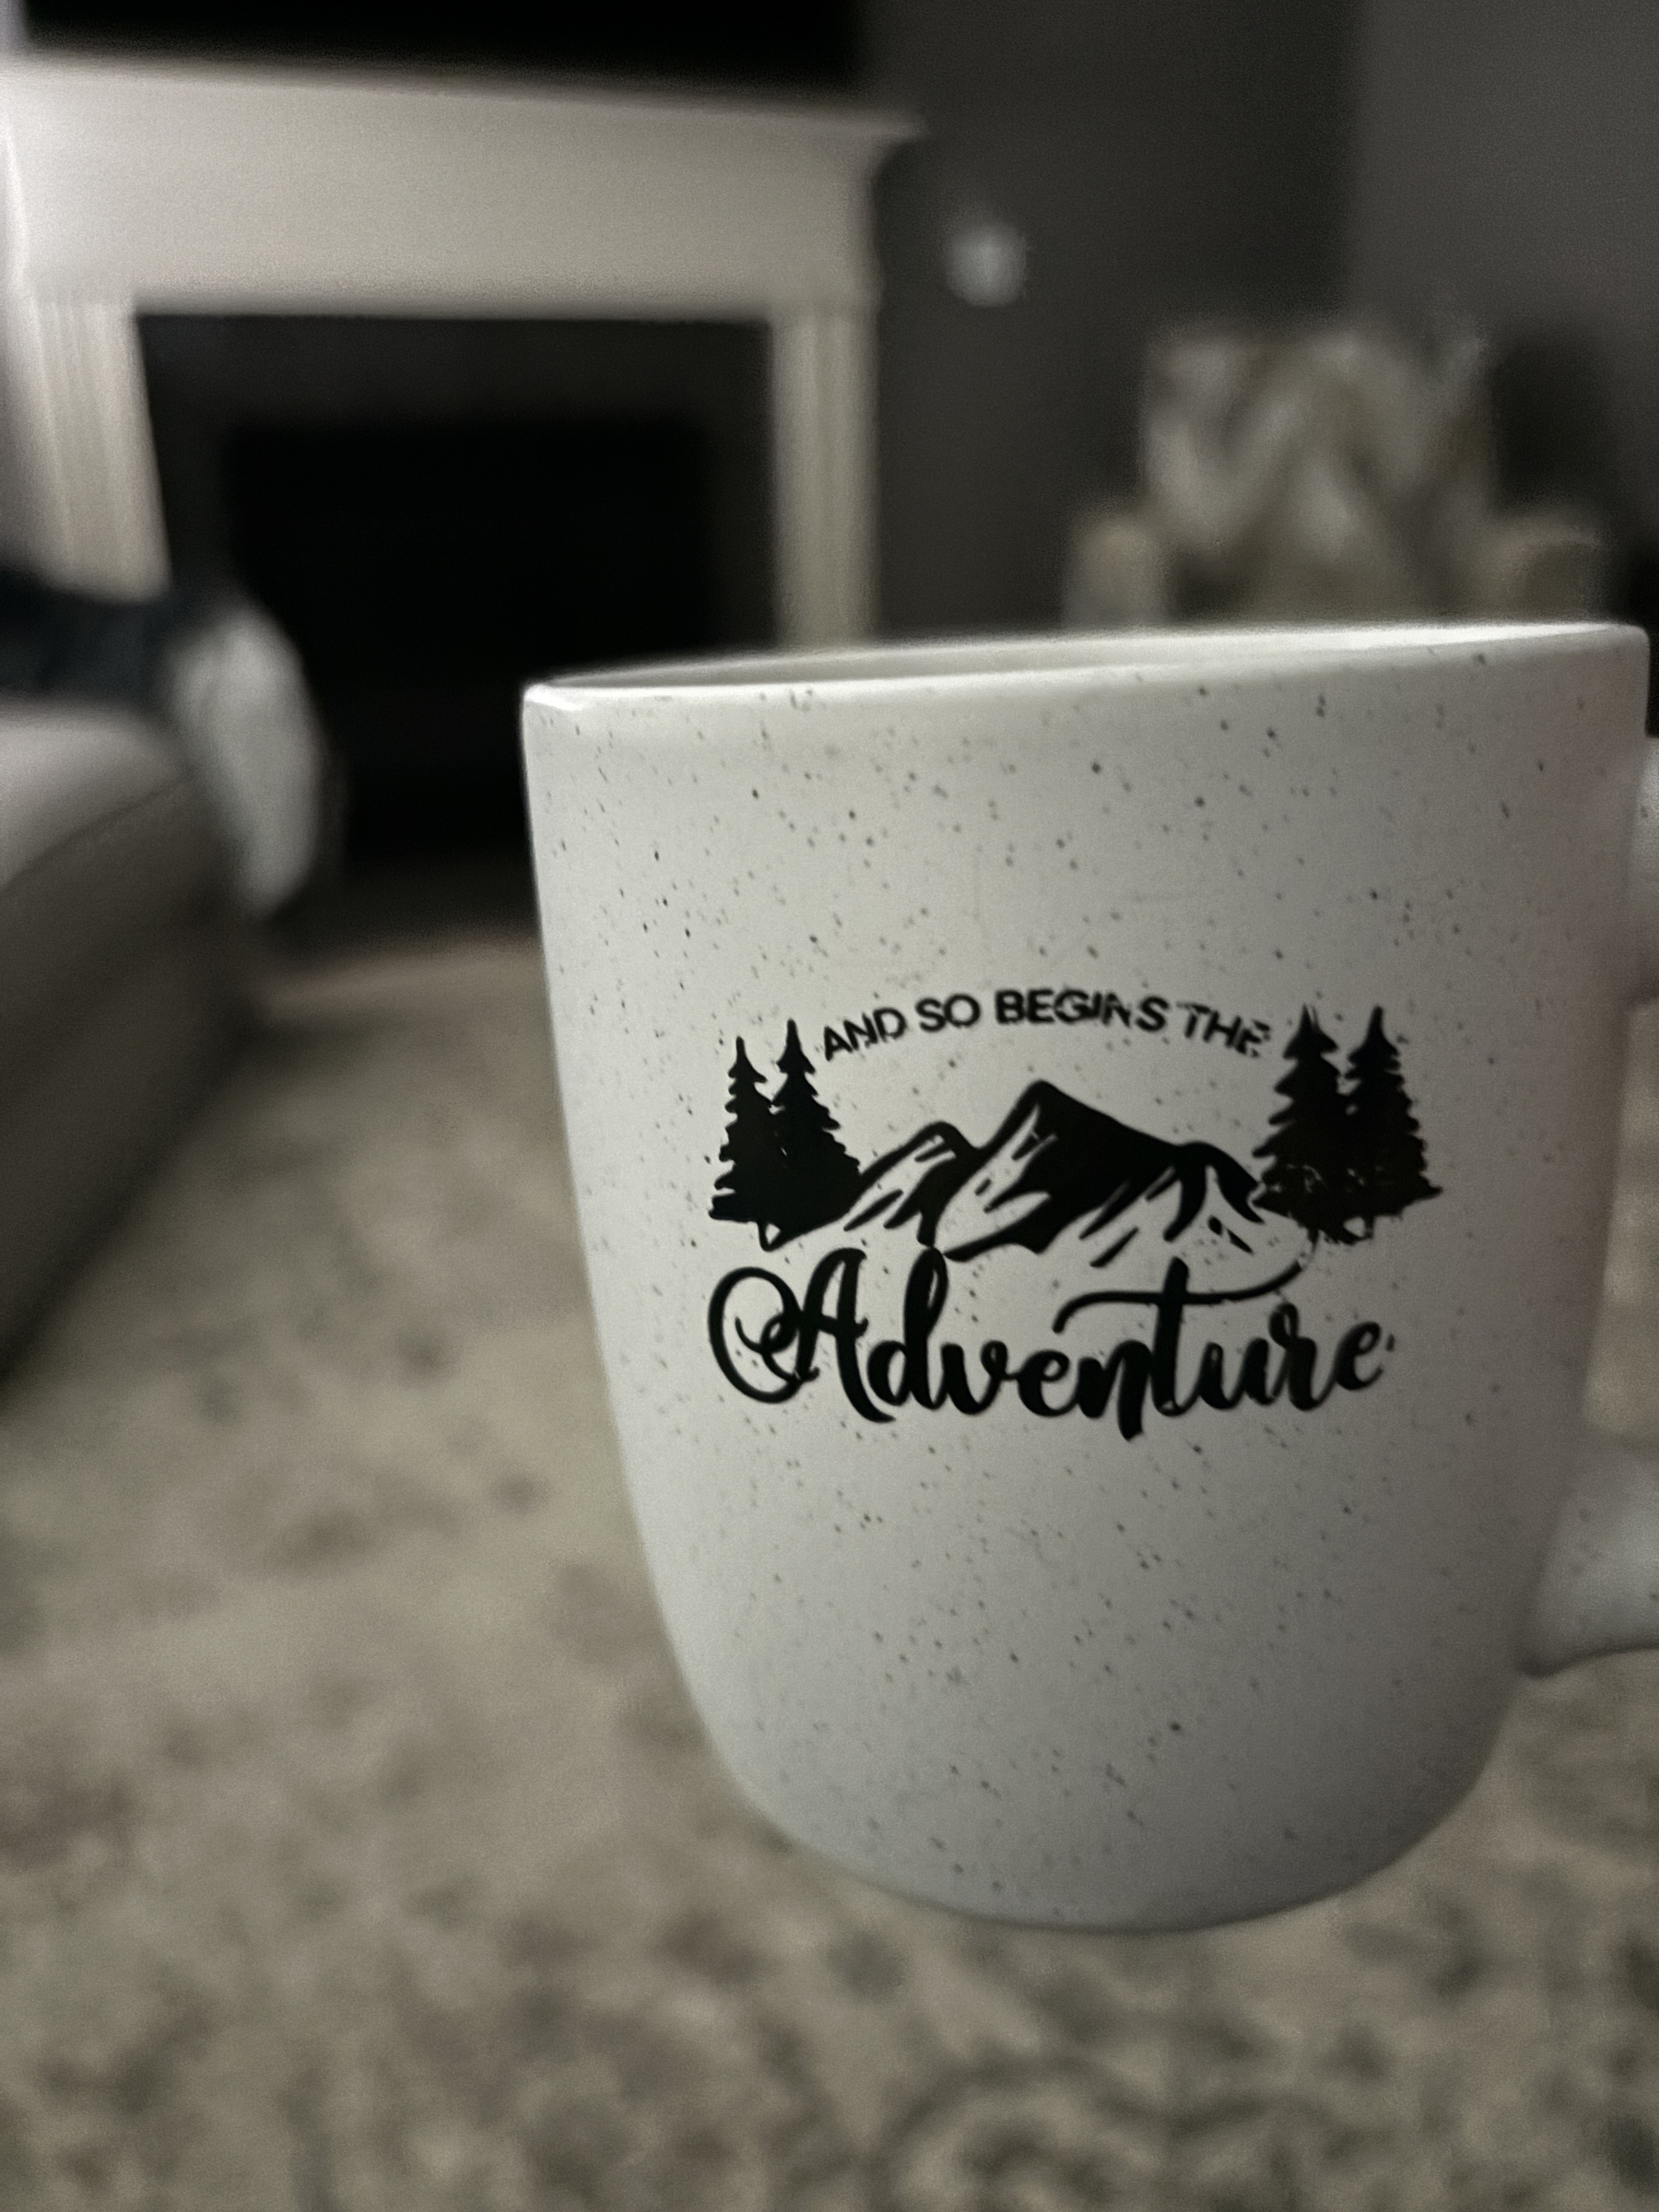 a coffee mug that says “so begins the adventure”